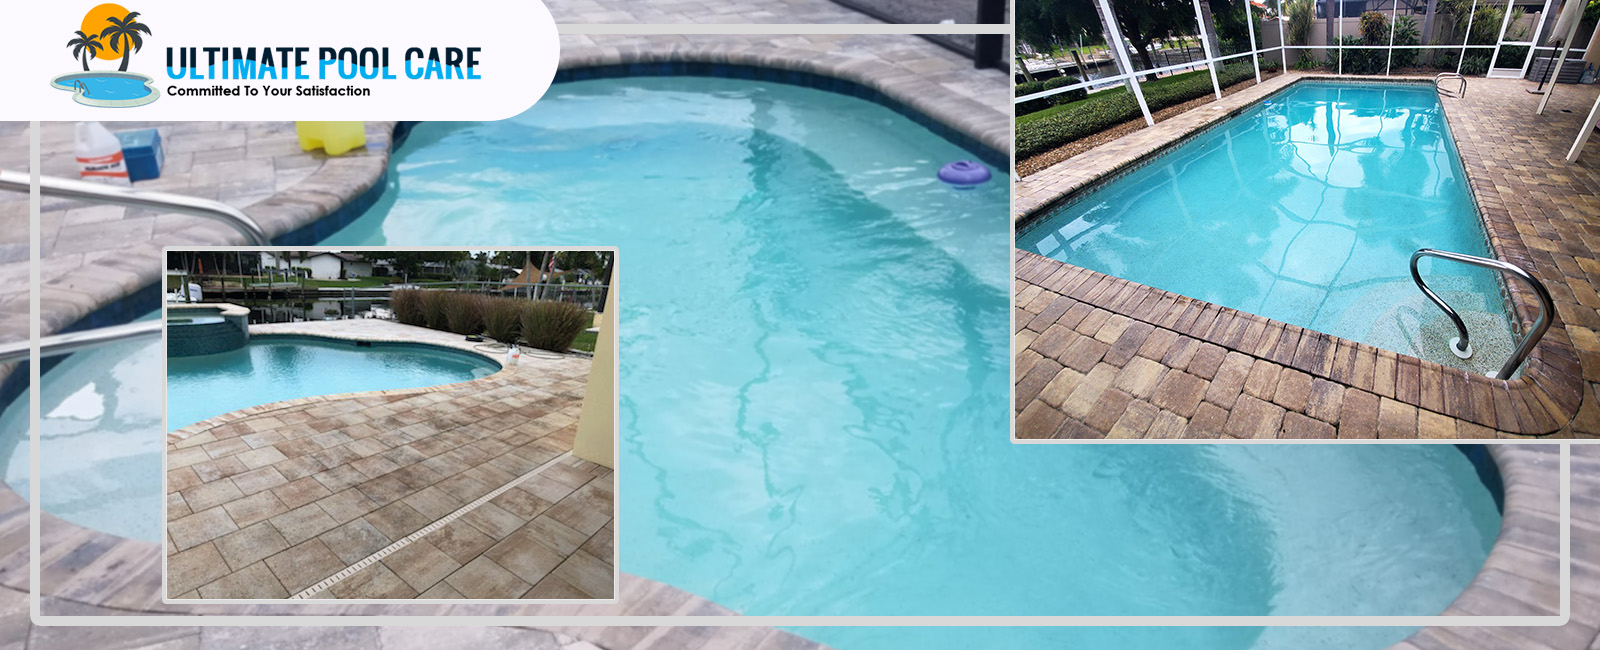 Jacuzzi-and-rectangular-inground-swimming-pool-with-block-pavers